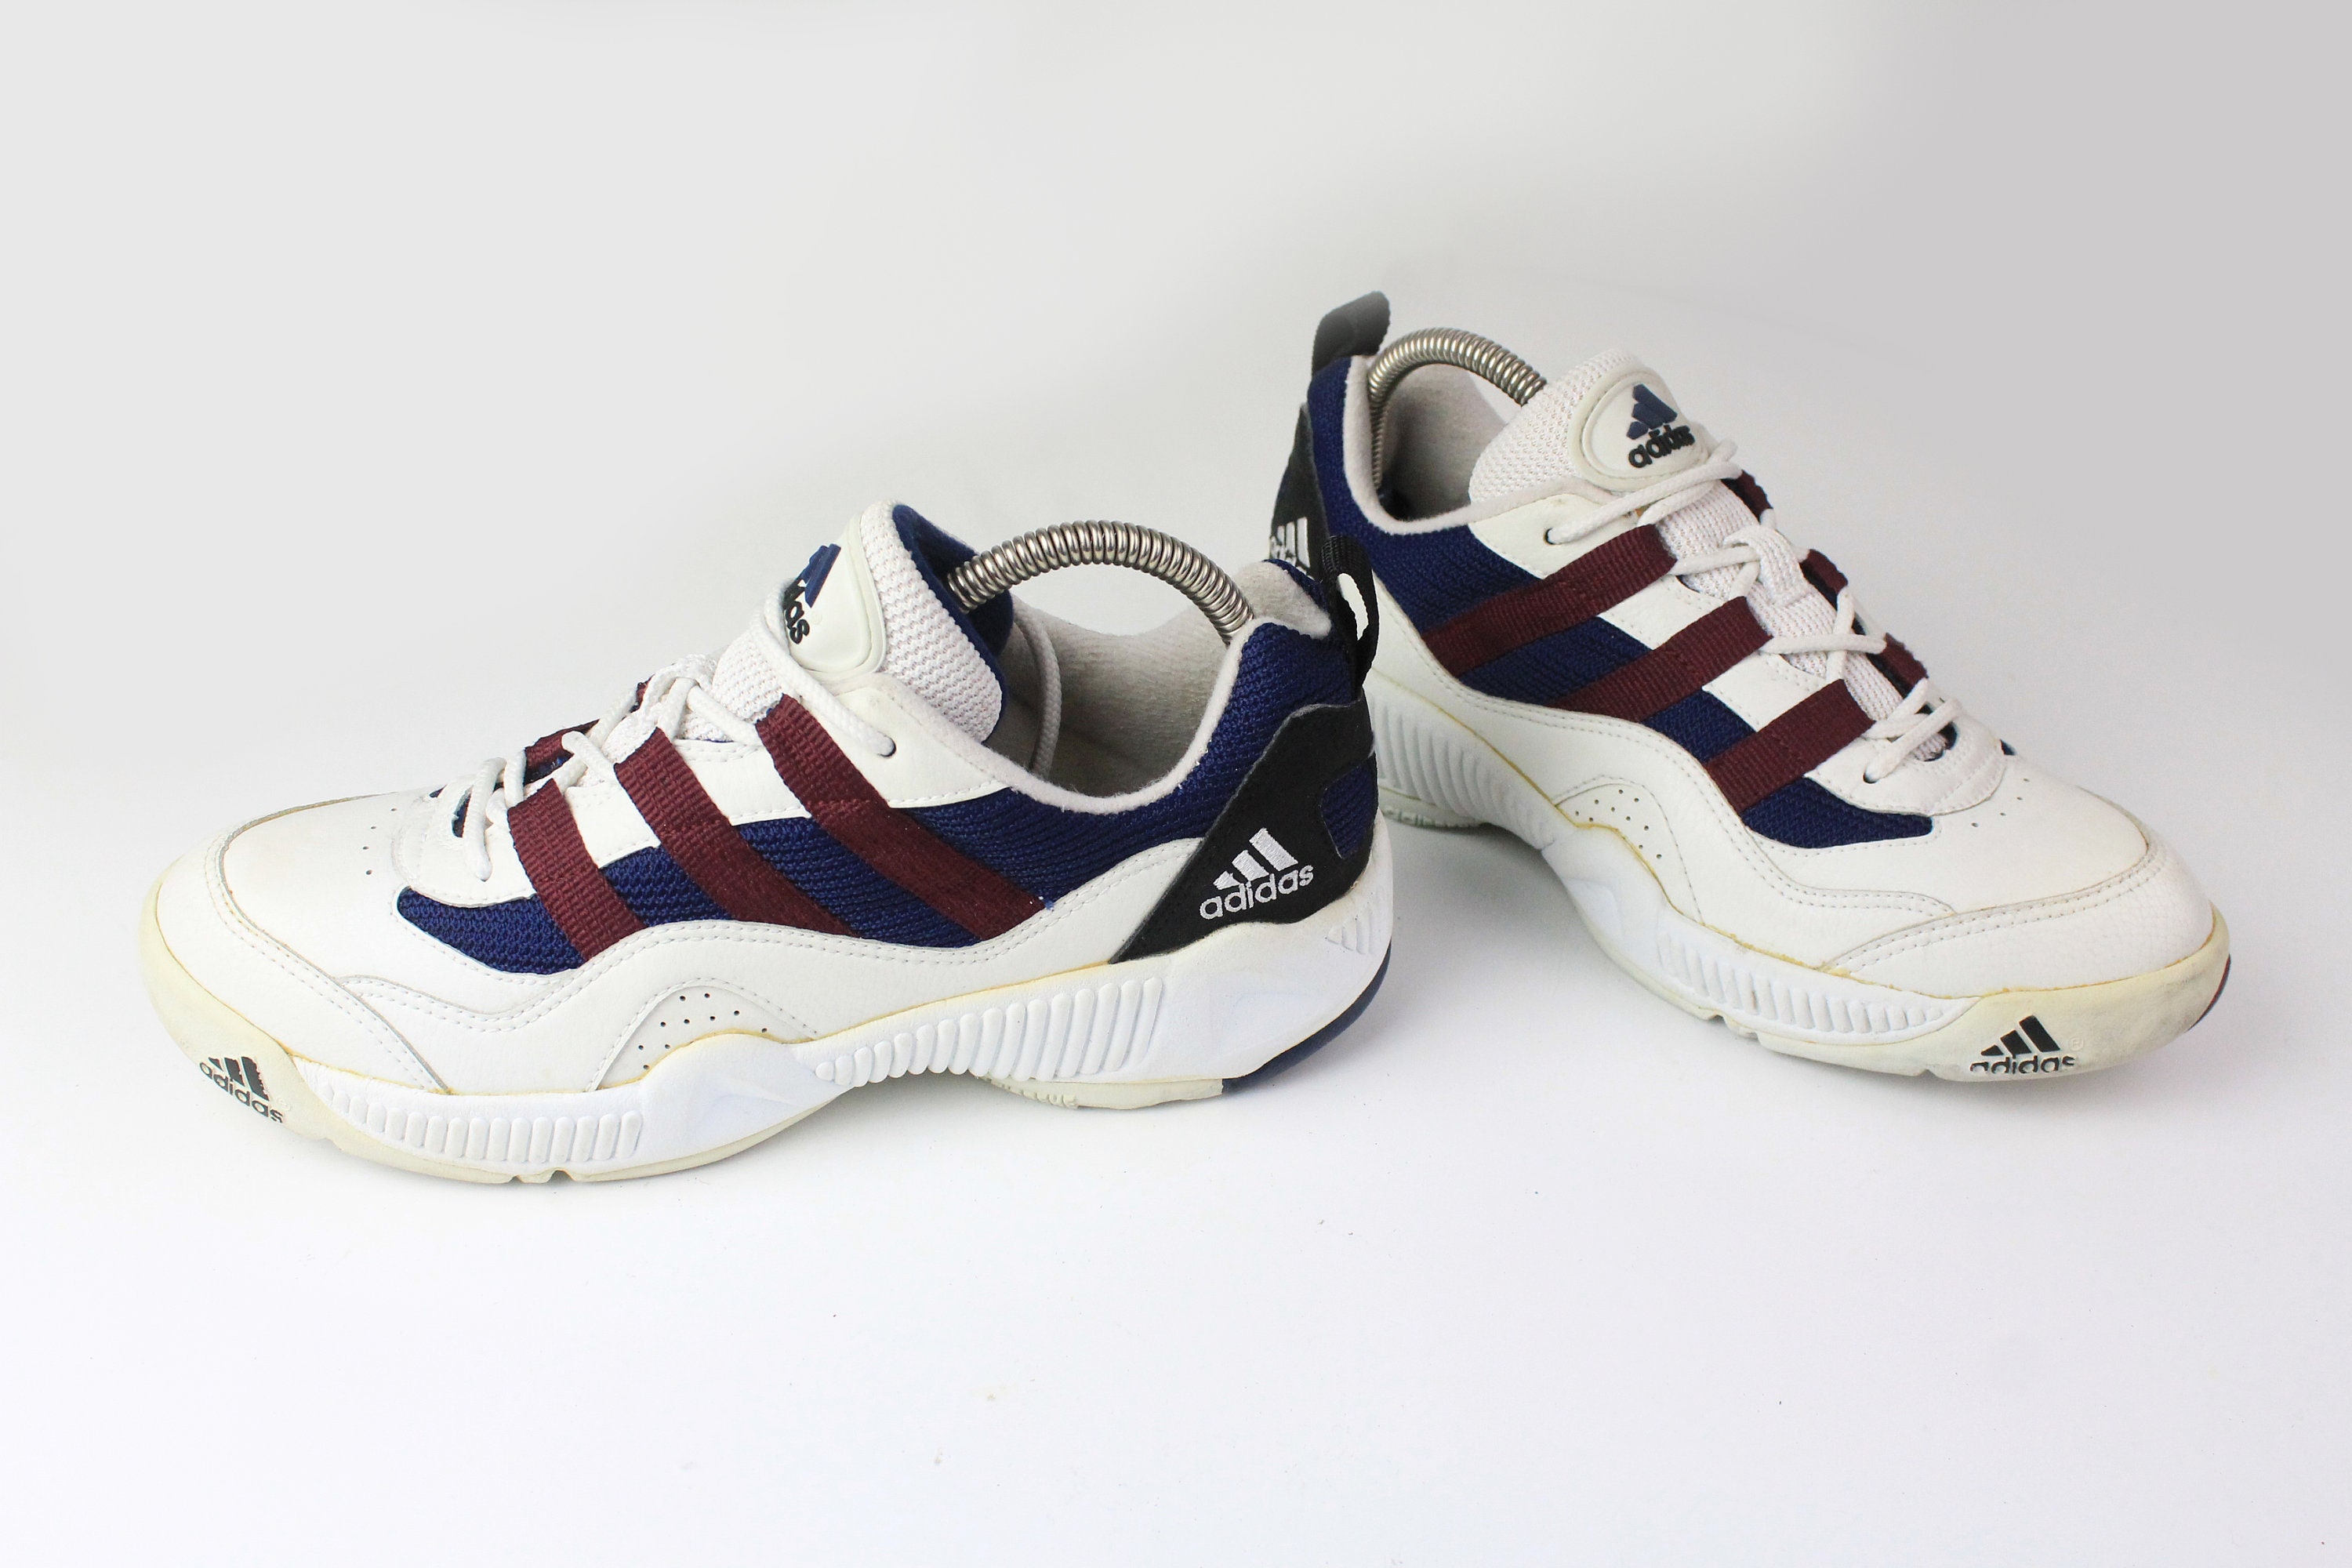 Adidas 90s Sneakers. Купить кроссовки адидас Трейл фото 90-х в Москве. Кроссовки адидас из 90 х